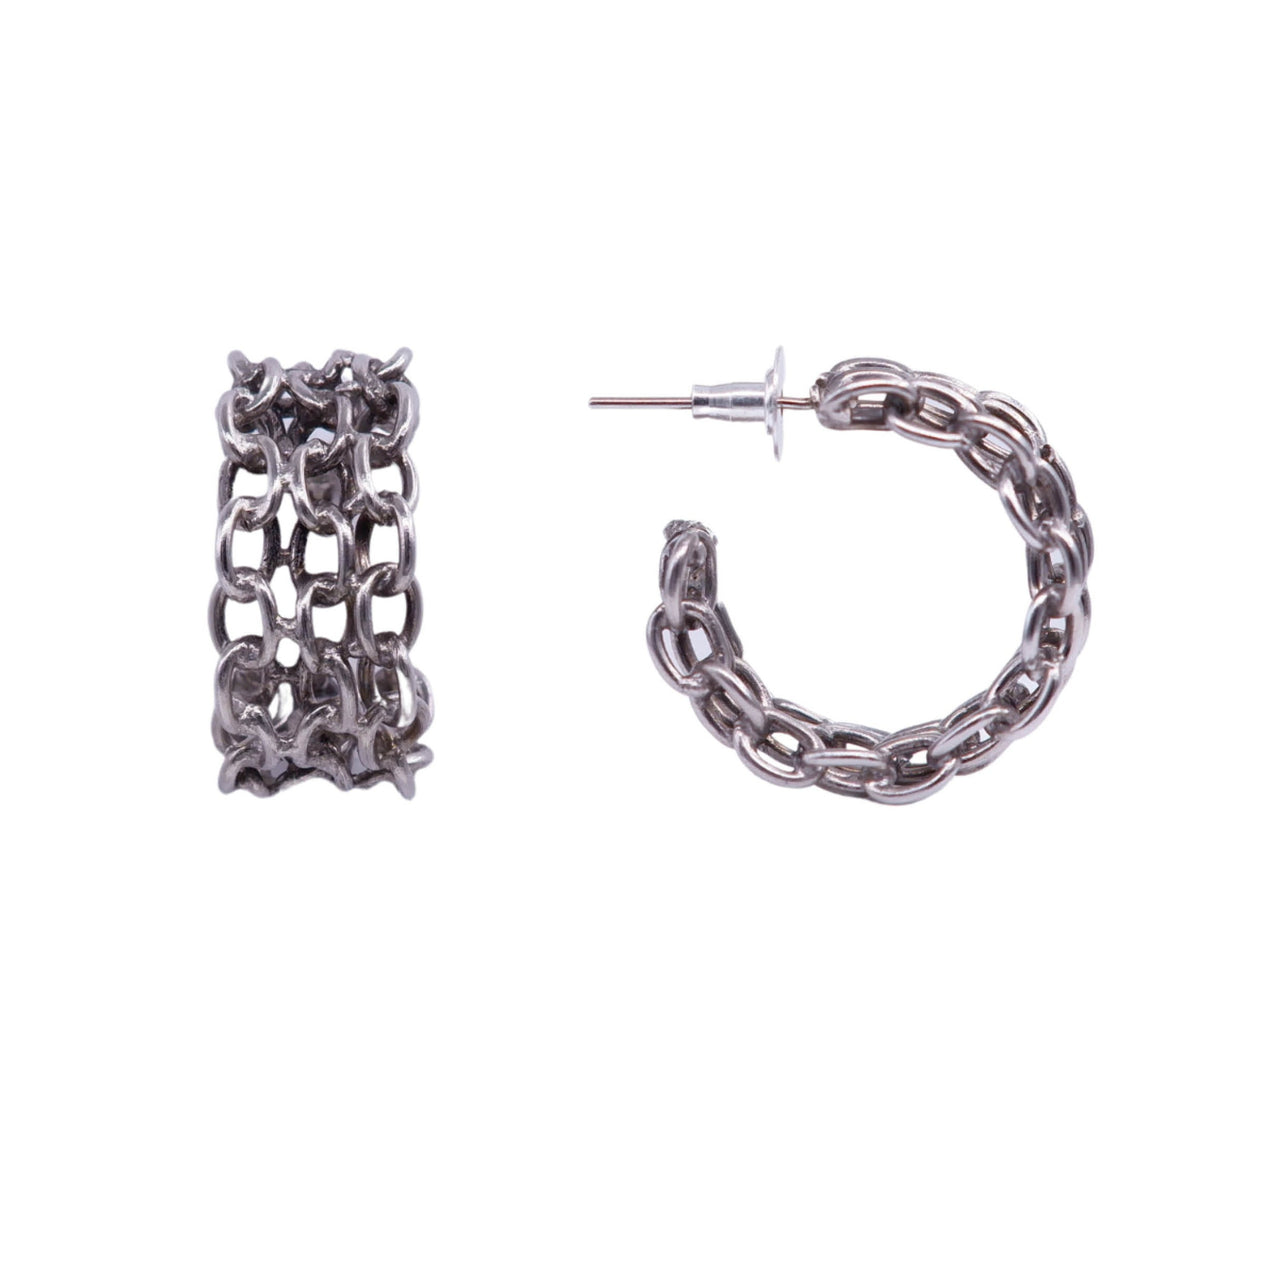 Silver Hoop Earrings - Gift for wife 